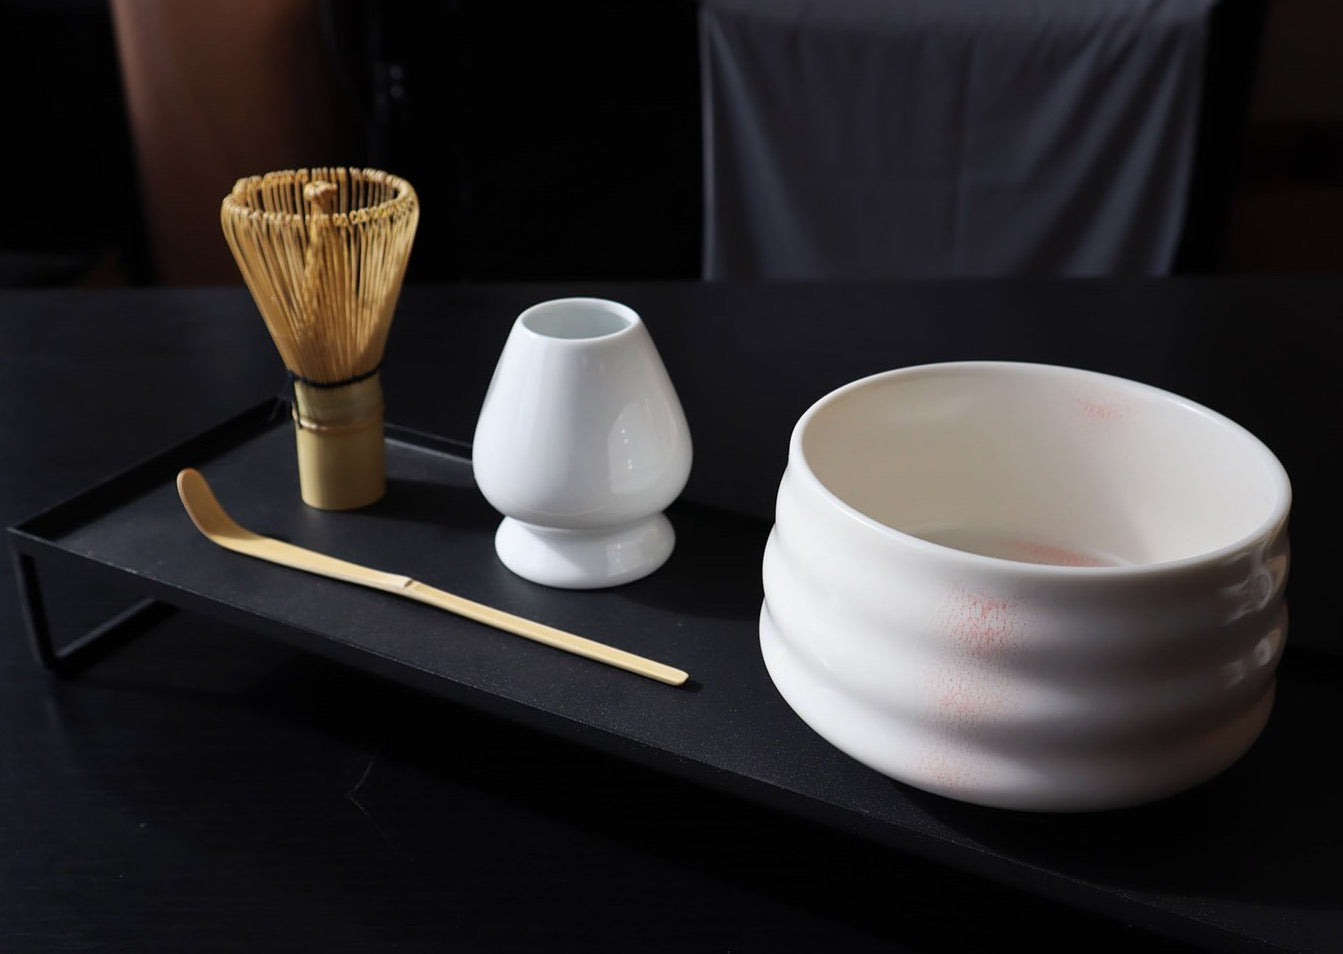 Japanese matcha tea ceremony kit with white bowl